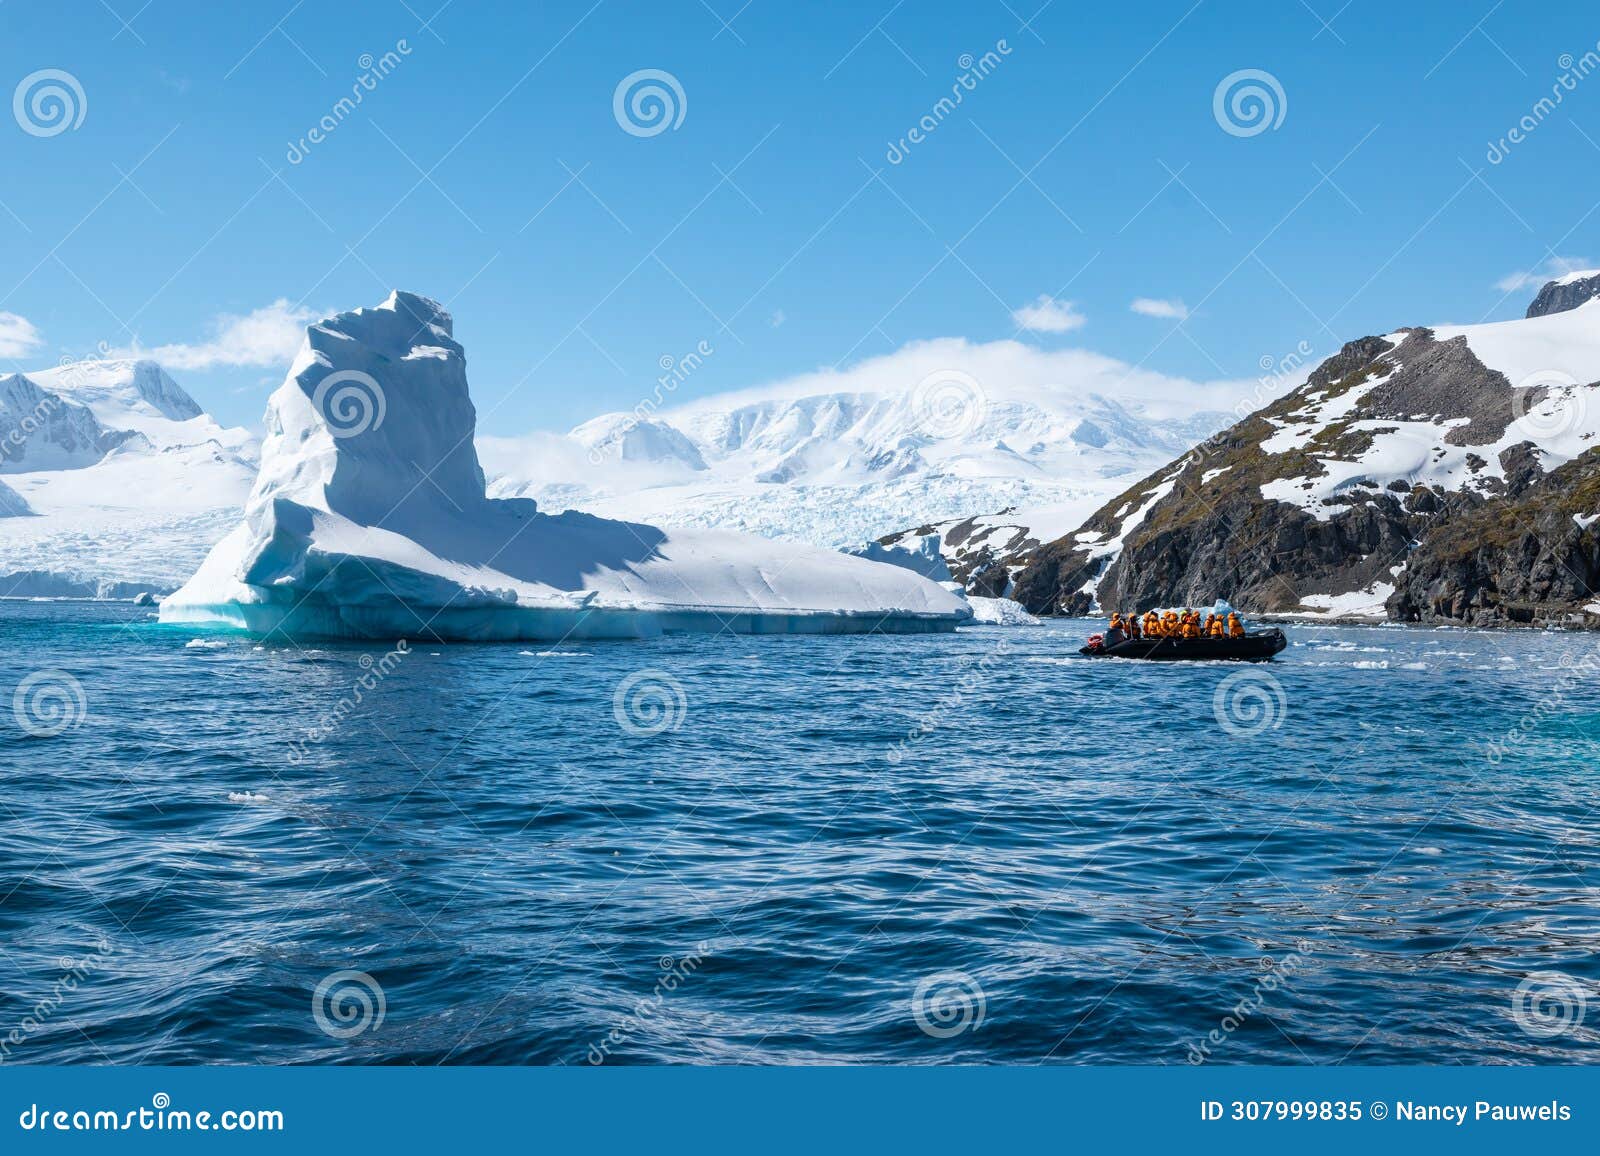 landscape with iceberg in cierva cove, antarctica. antarctic expedition.